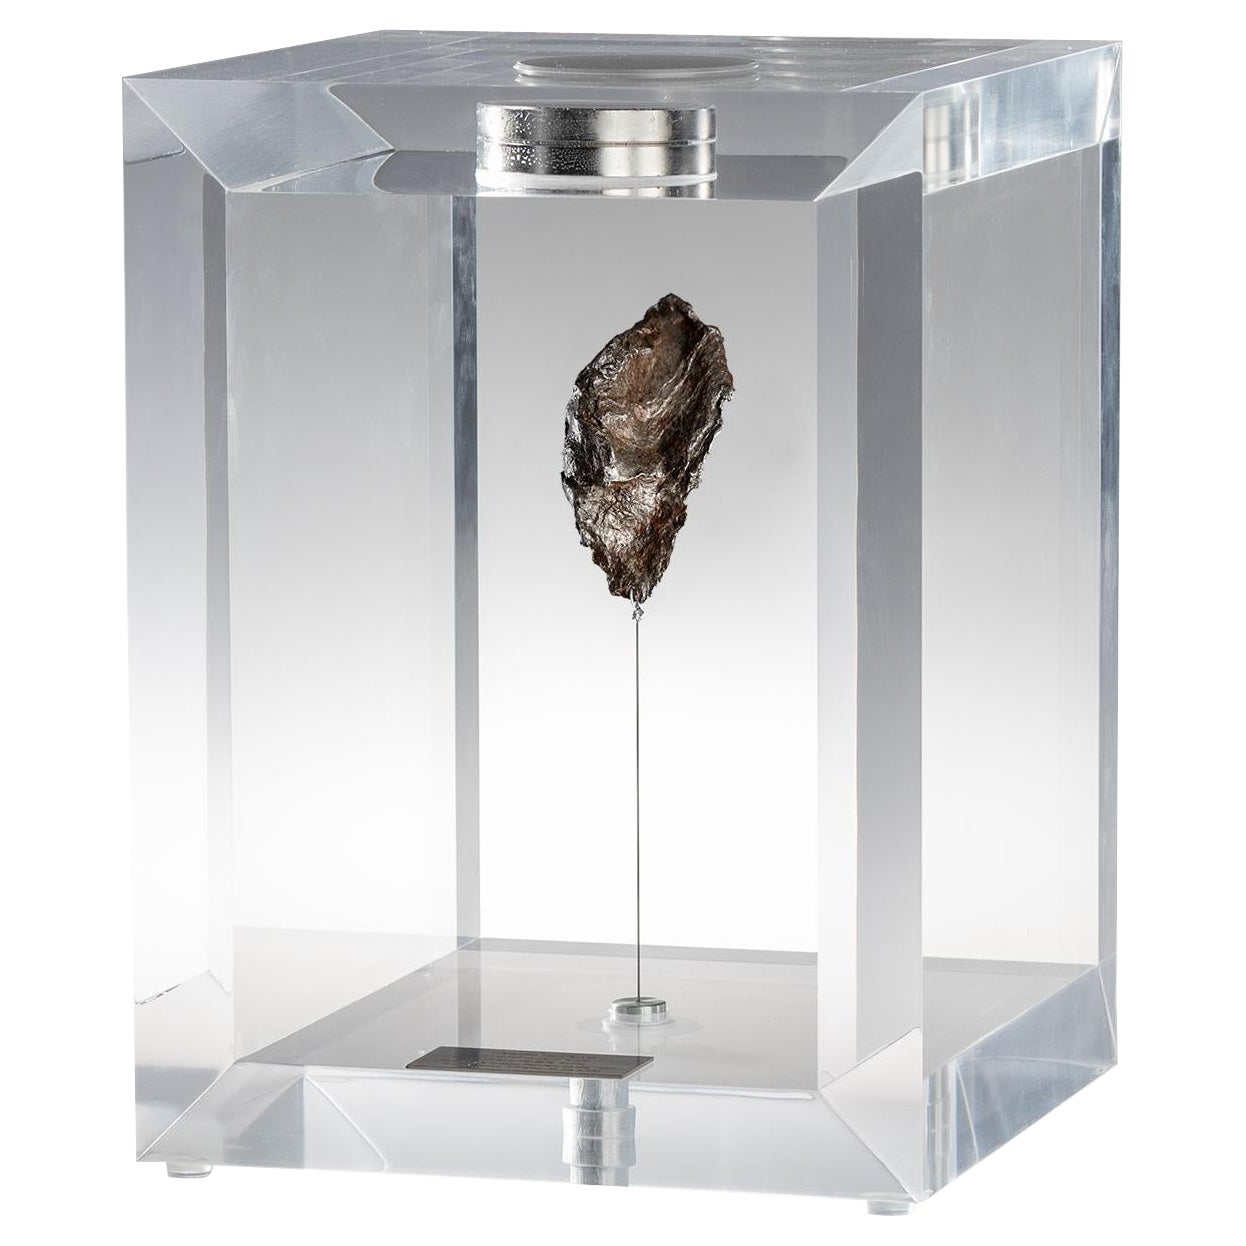 Original Design, Space Box, Sikhote Alin Meteorite in Acrylic Box